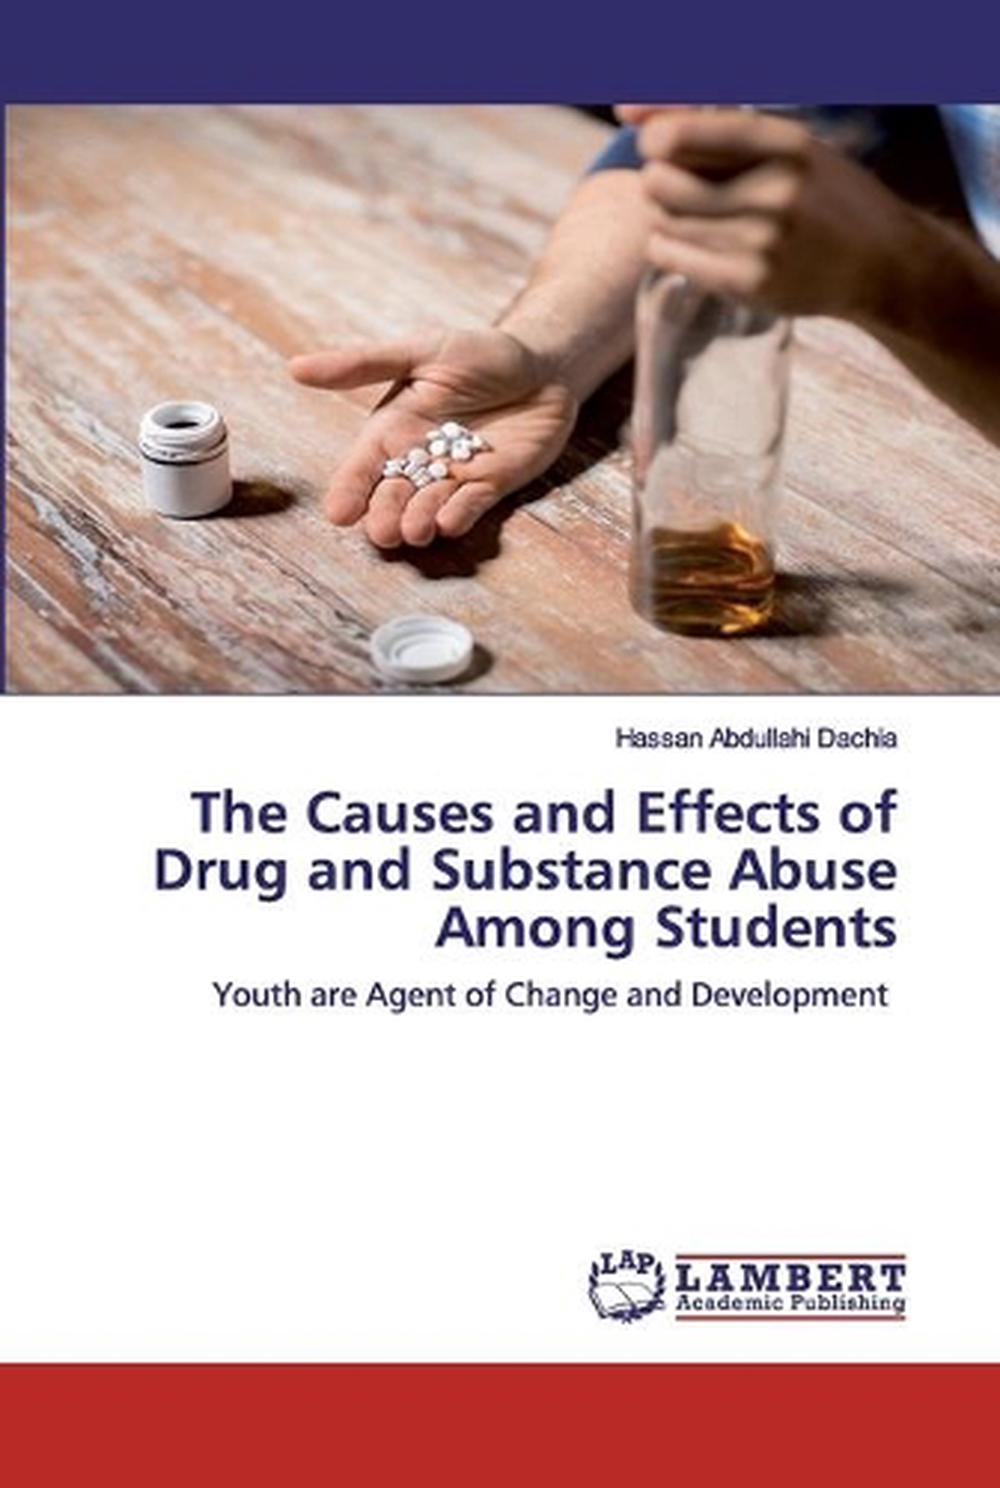 oral presentation on substance abuse